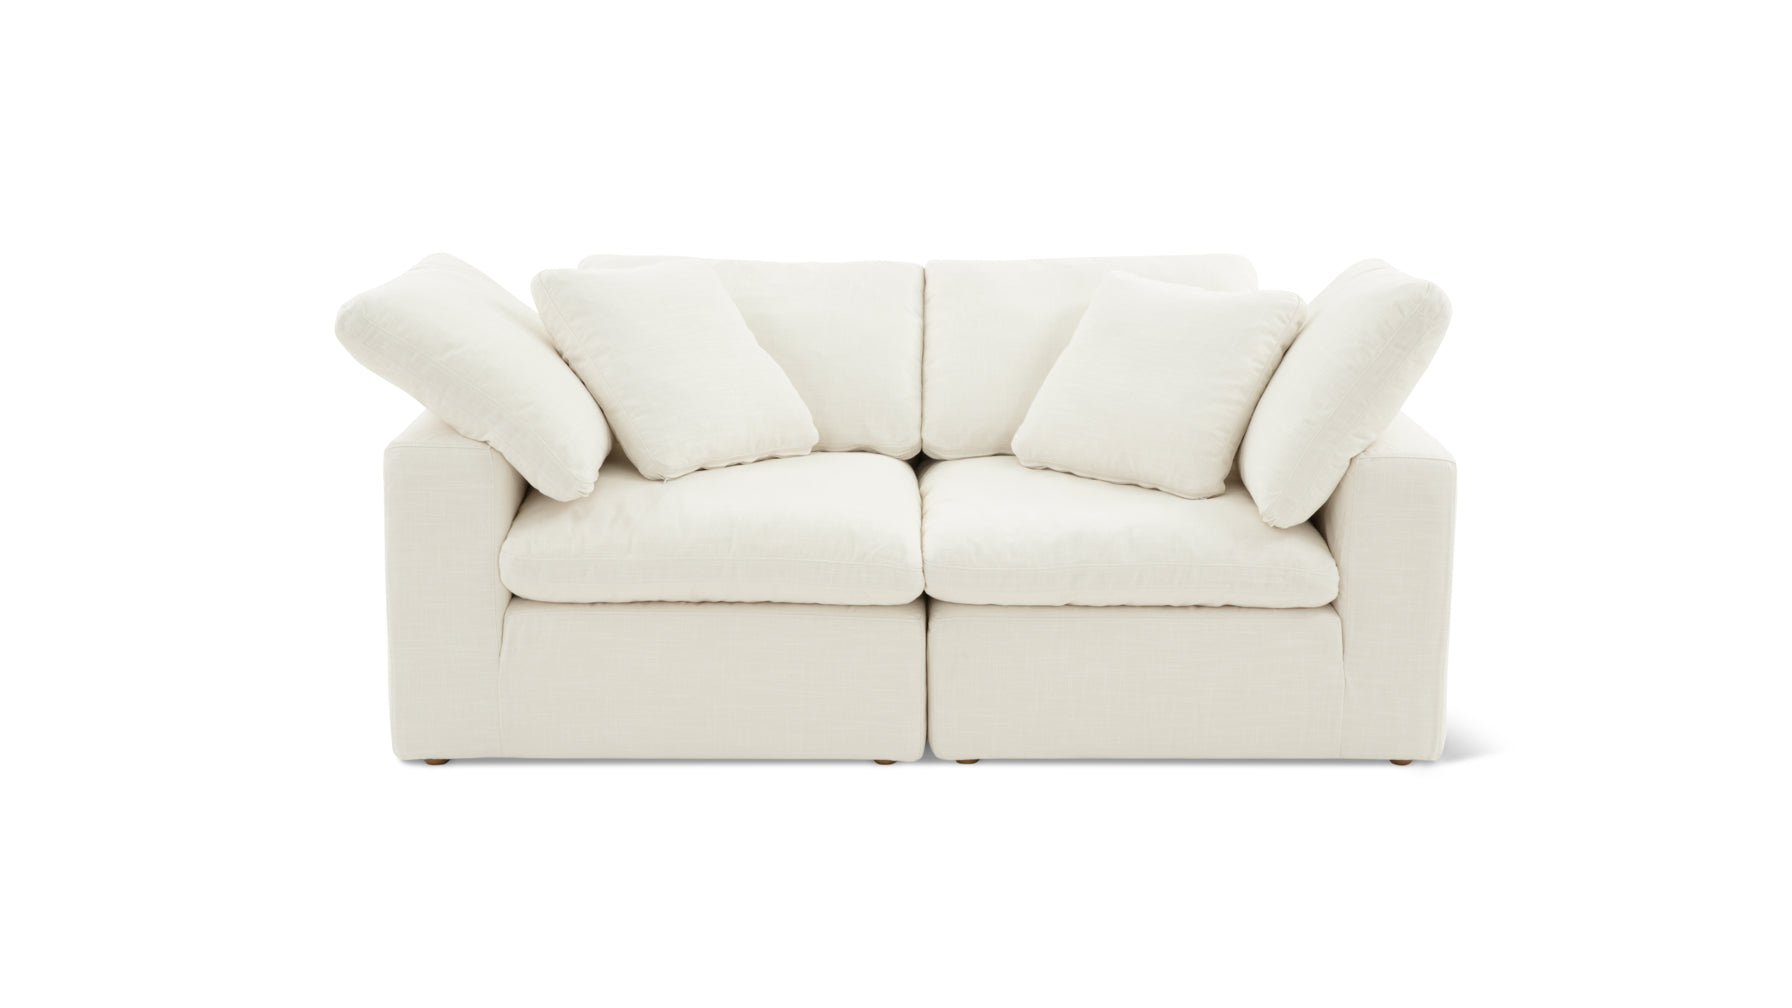 Movie Night™ 2-Piece Modular Sofa, Large, Cream Linen - Image 1